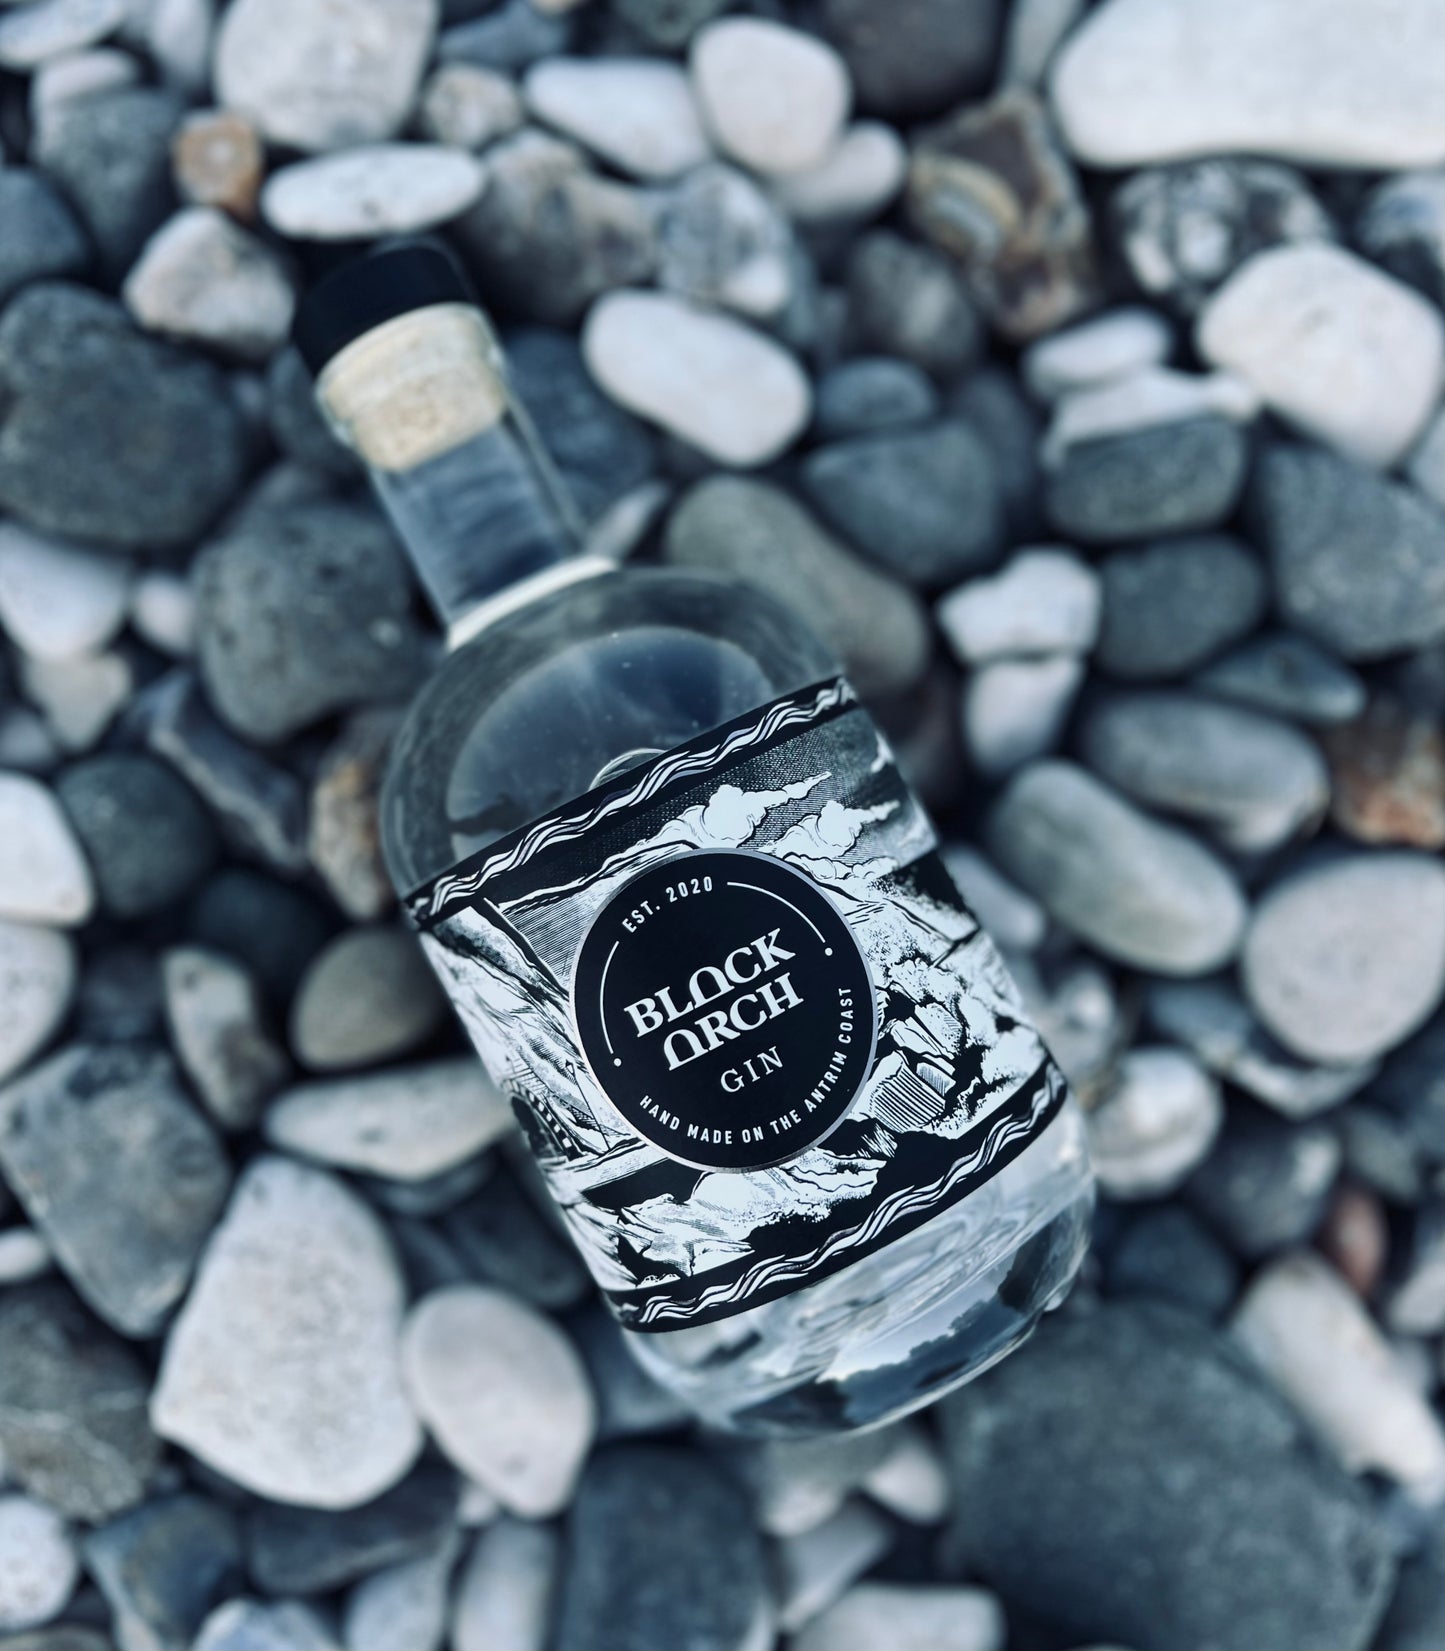 Black Arch Gin (70cl / 43%)